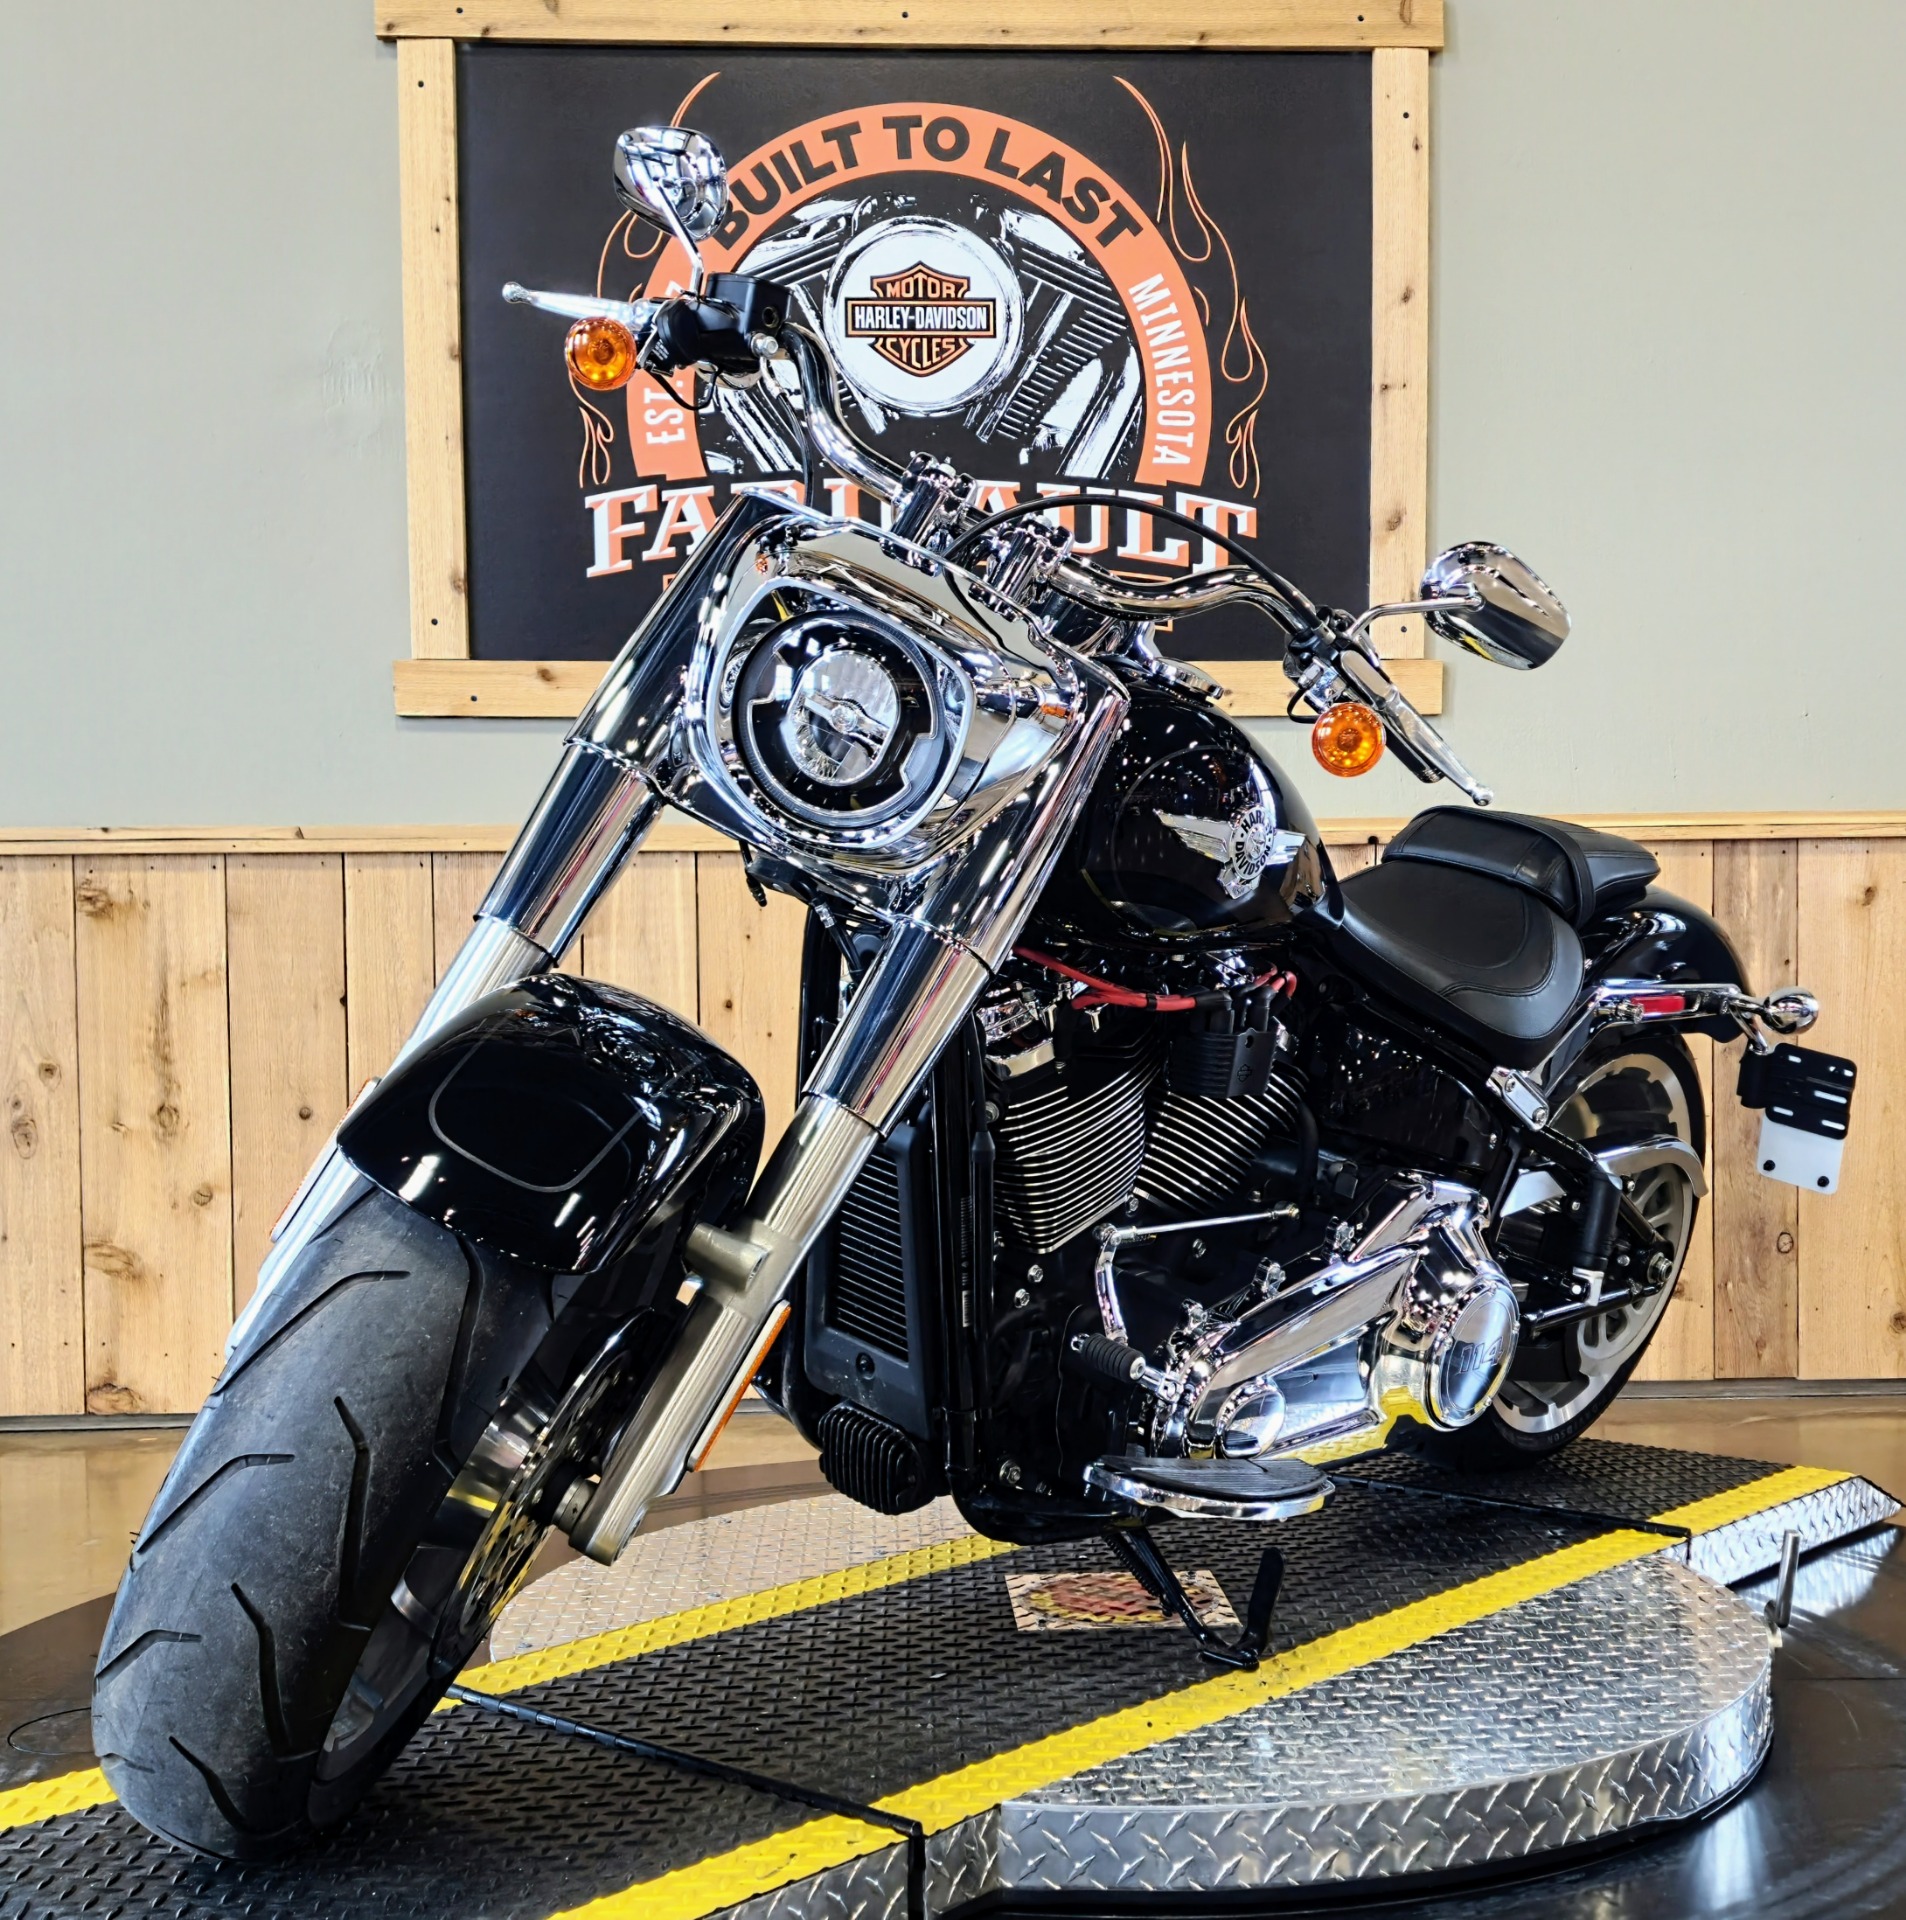 2021 Harley-Davidson Fat Boy® 114 in Faribault, Minnesota - Photo 4